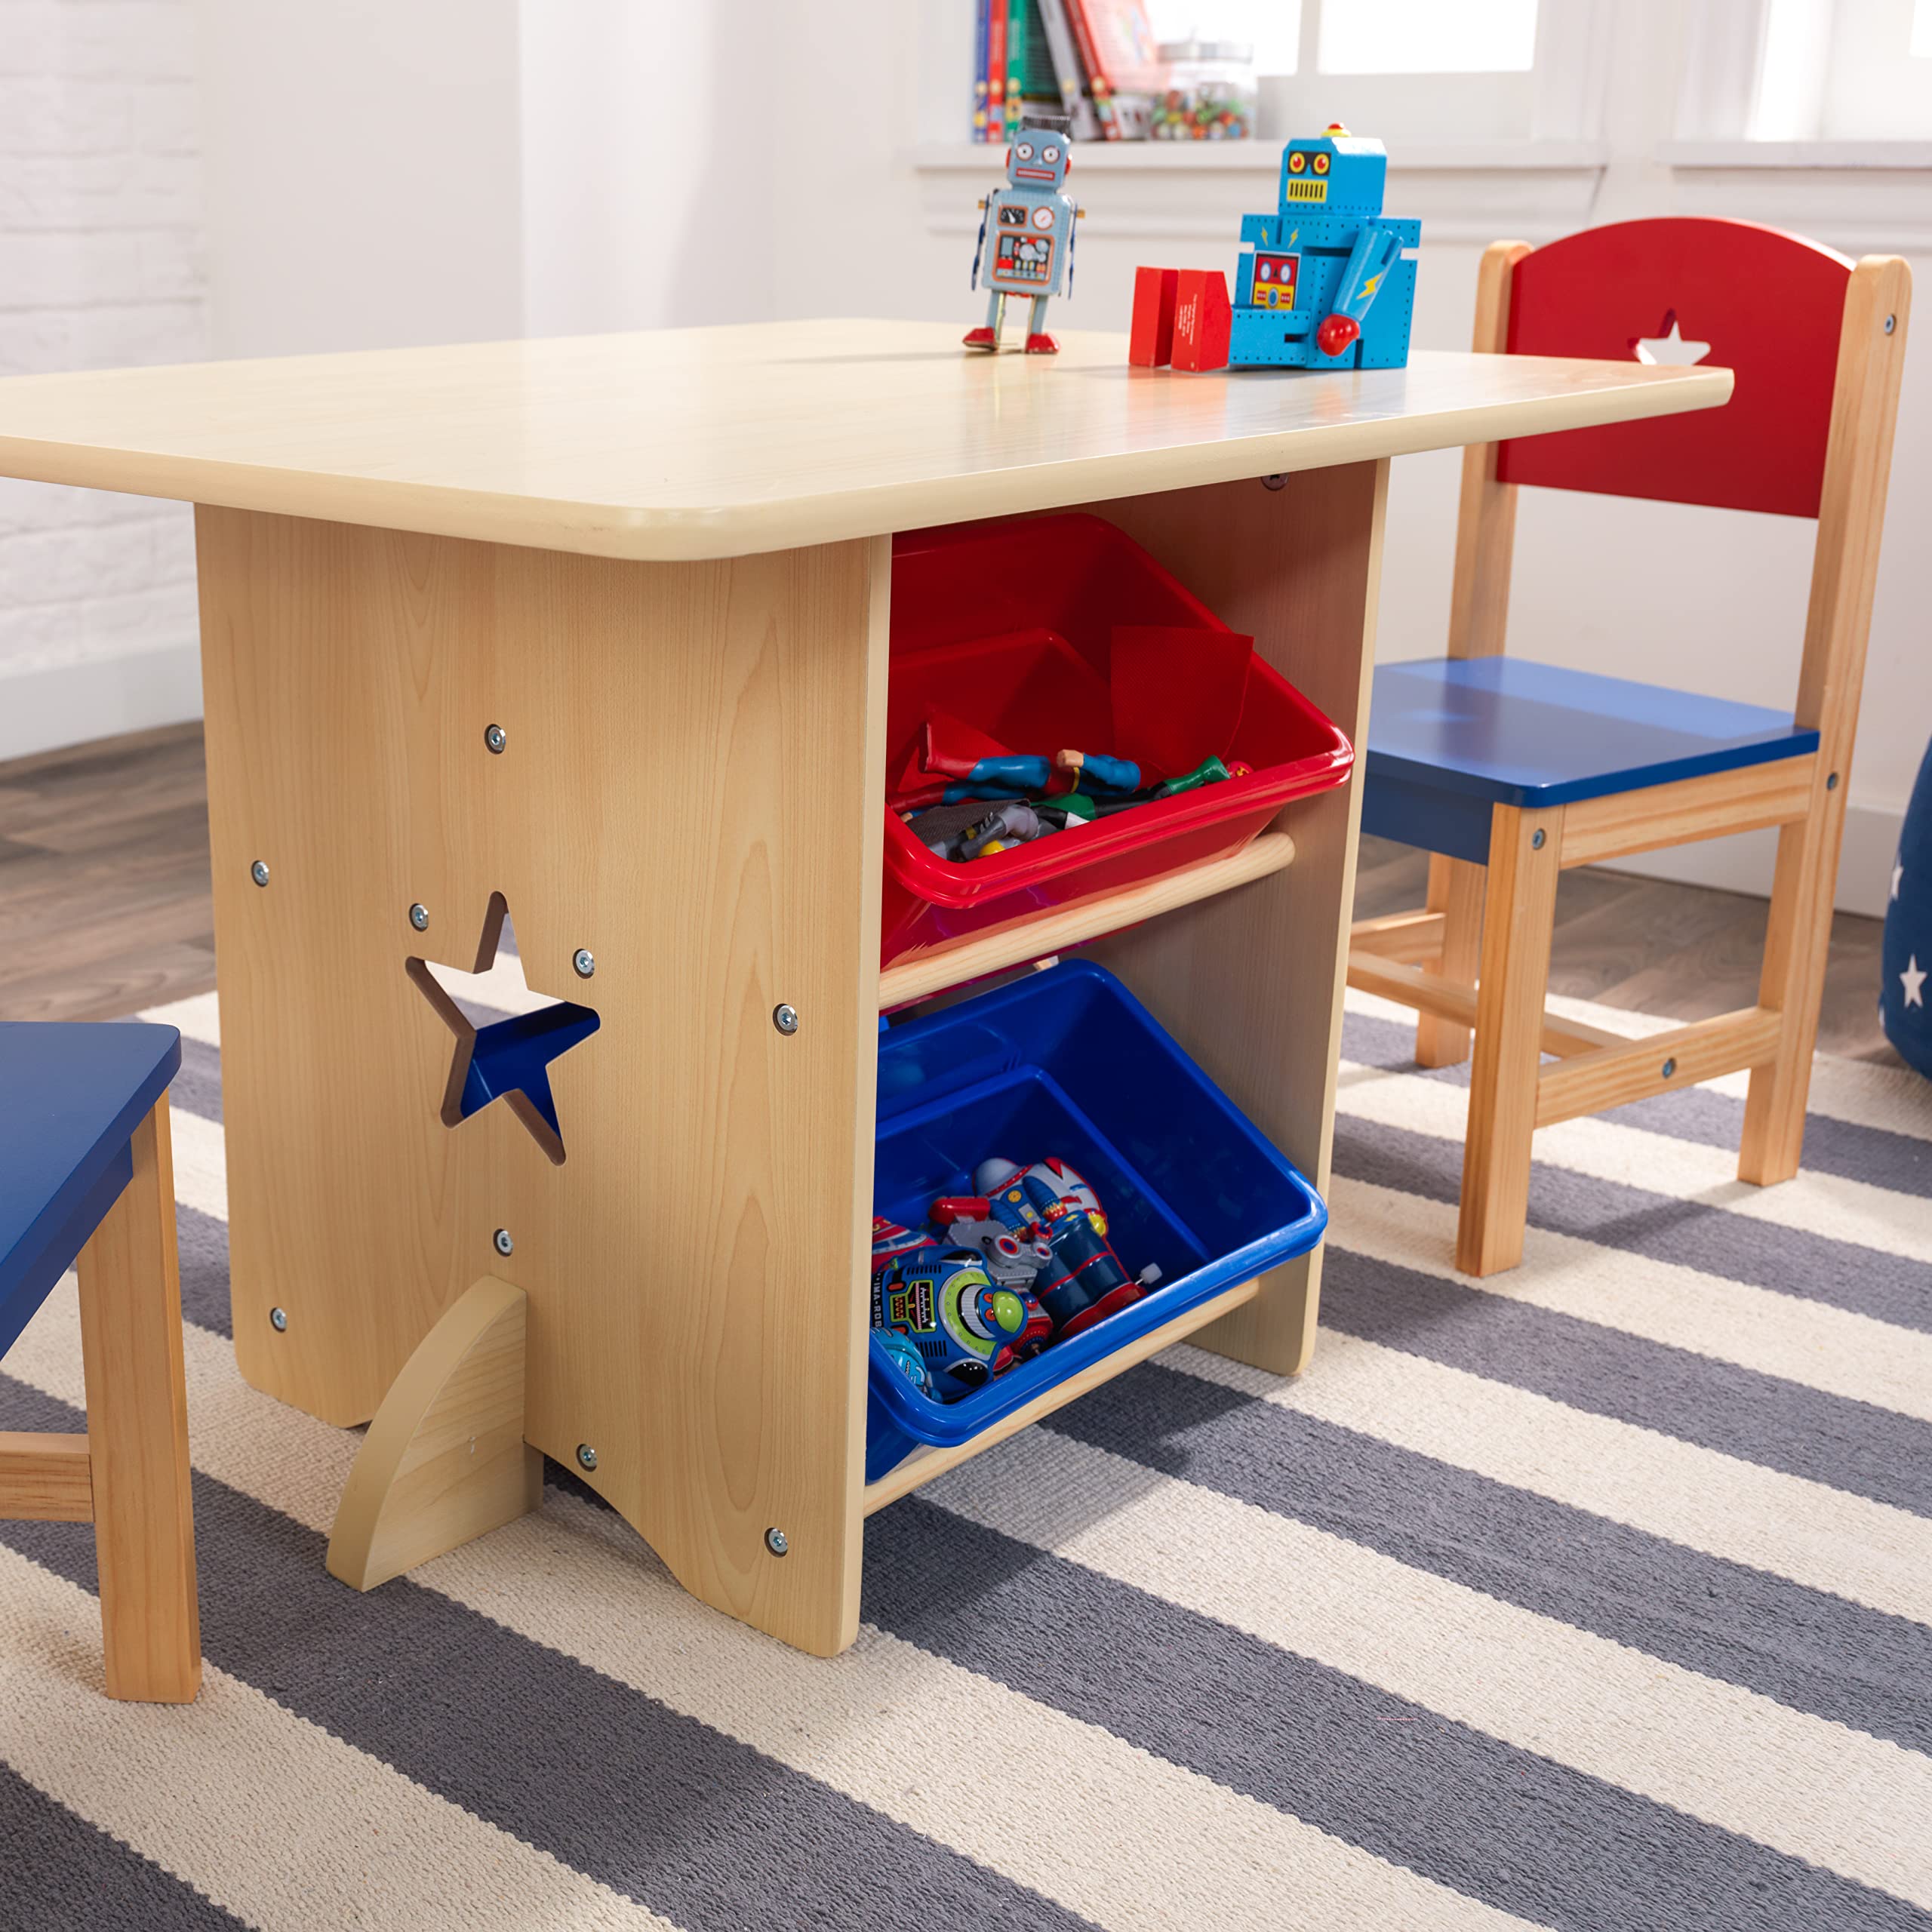 KidKraft Wooden Star Table & Chair Set with 4 Storage Bins, Children's Furniture – Red, Blue & Natural